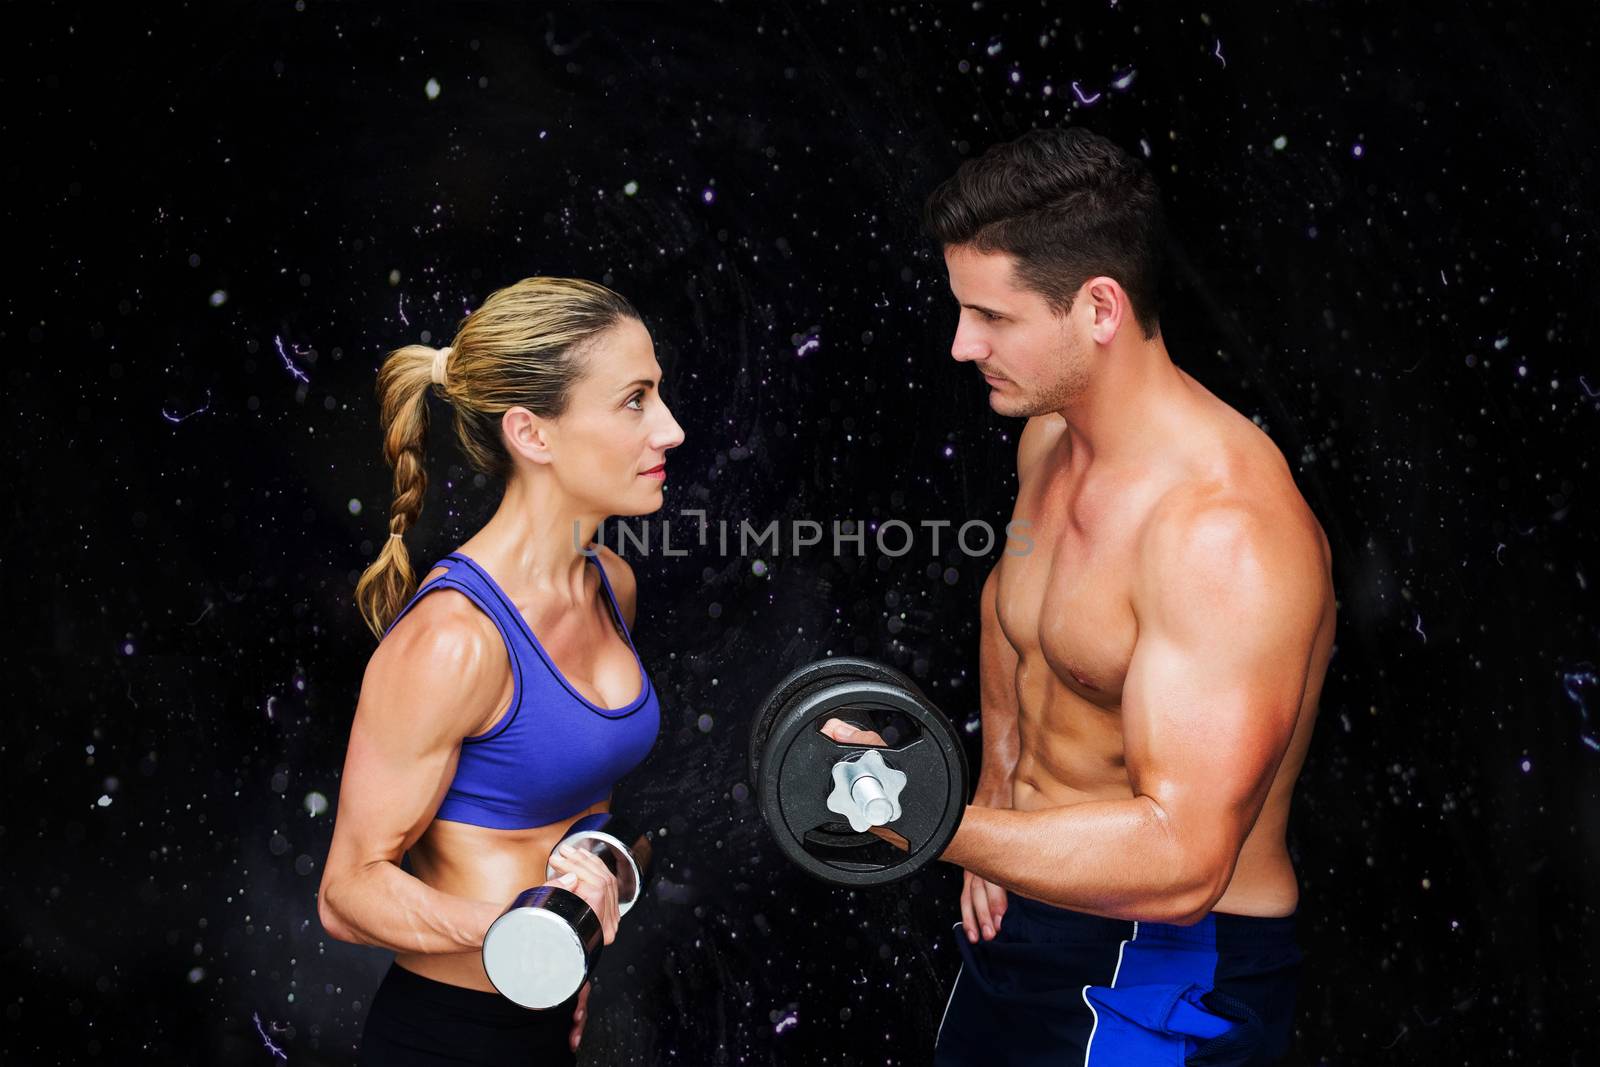 Bodybuilding couple against black background